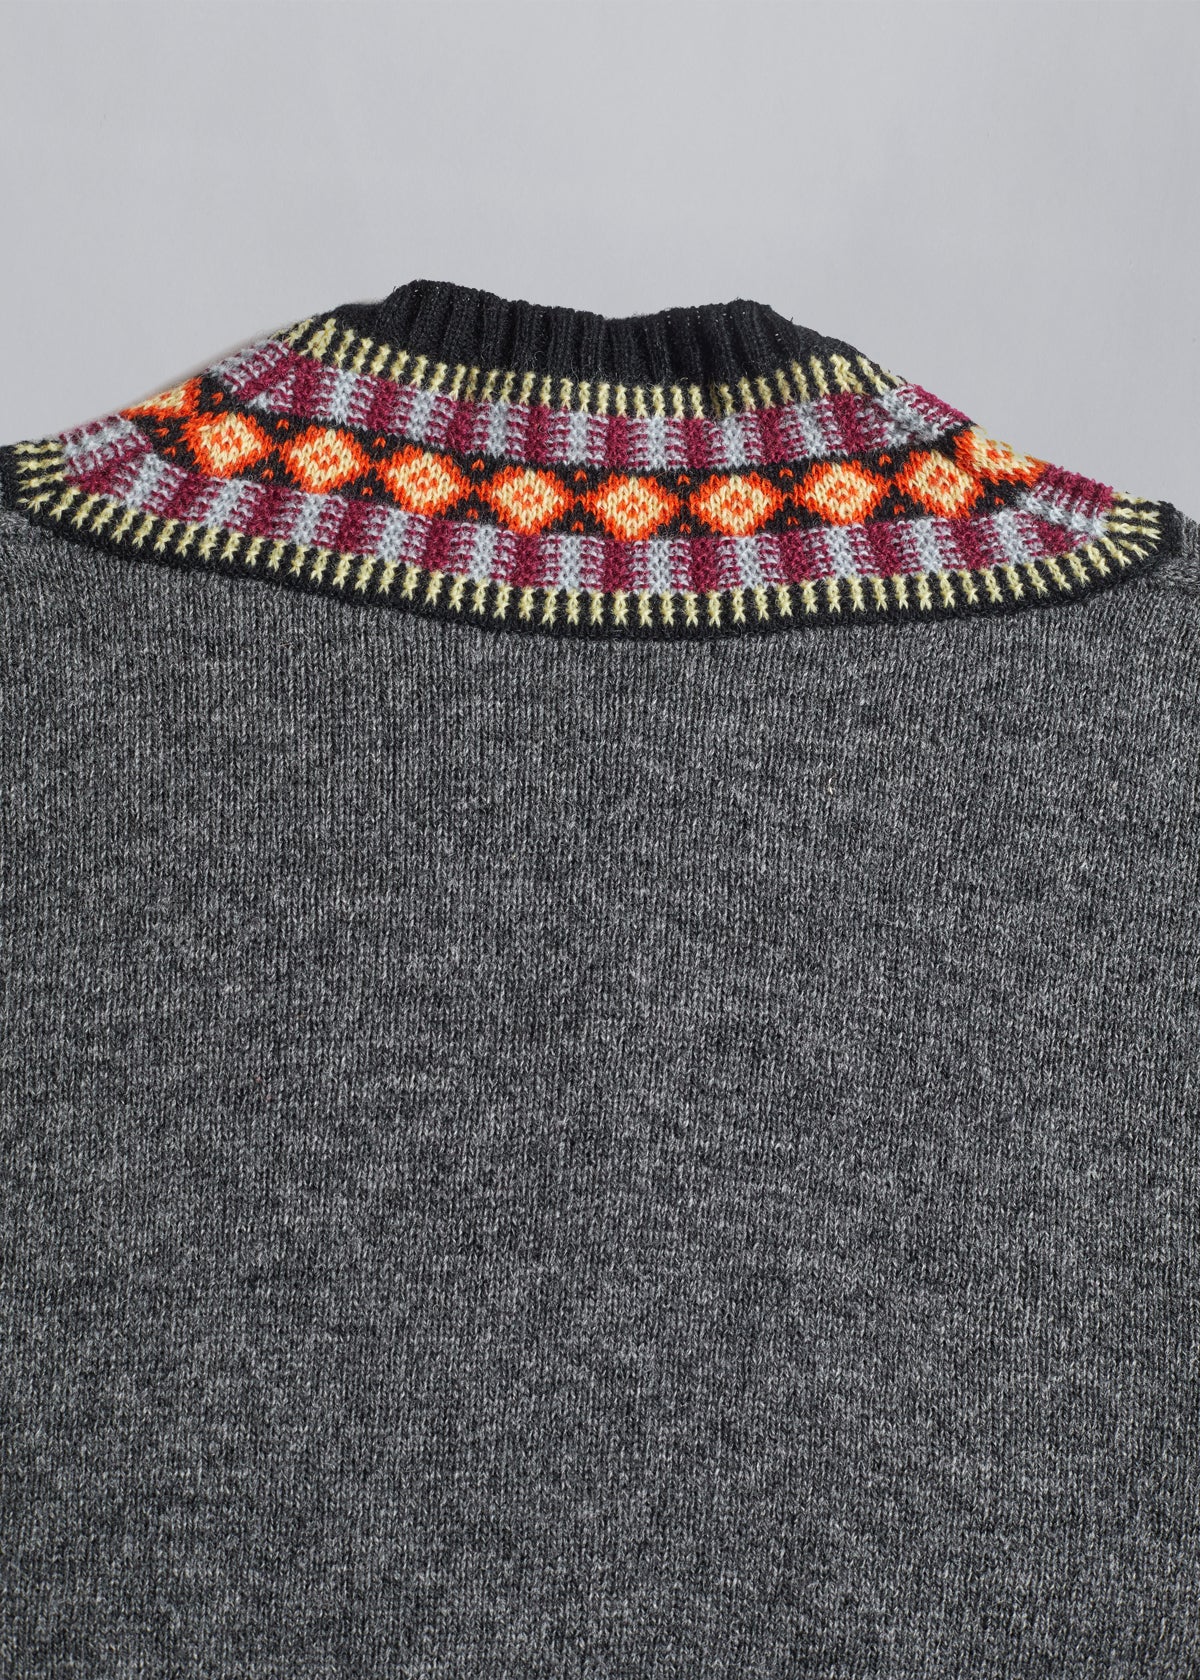 Homme Native Pattern V Neck Knit 2000 - Medium - The Archivist Store